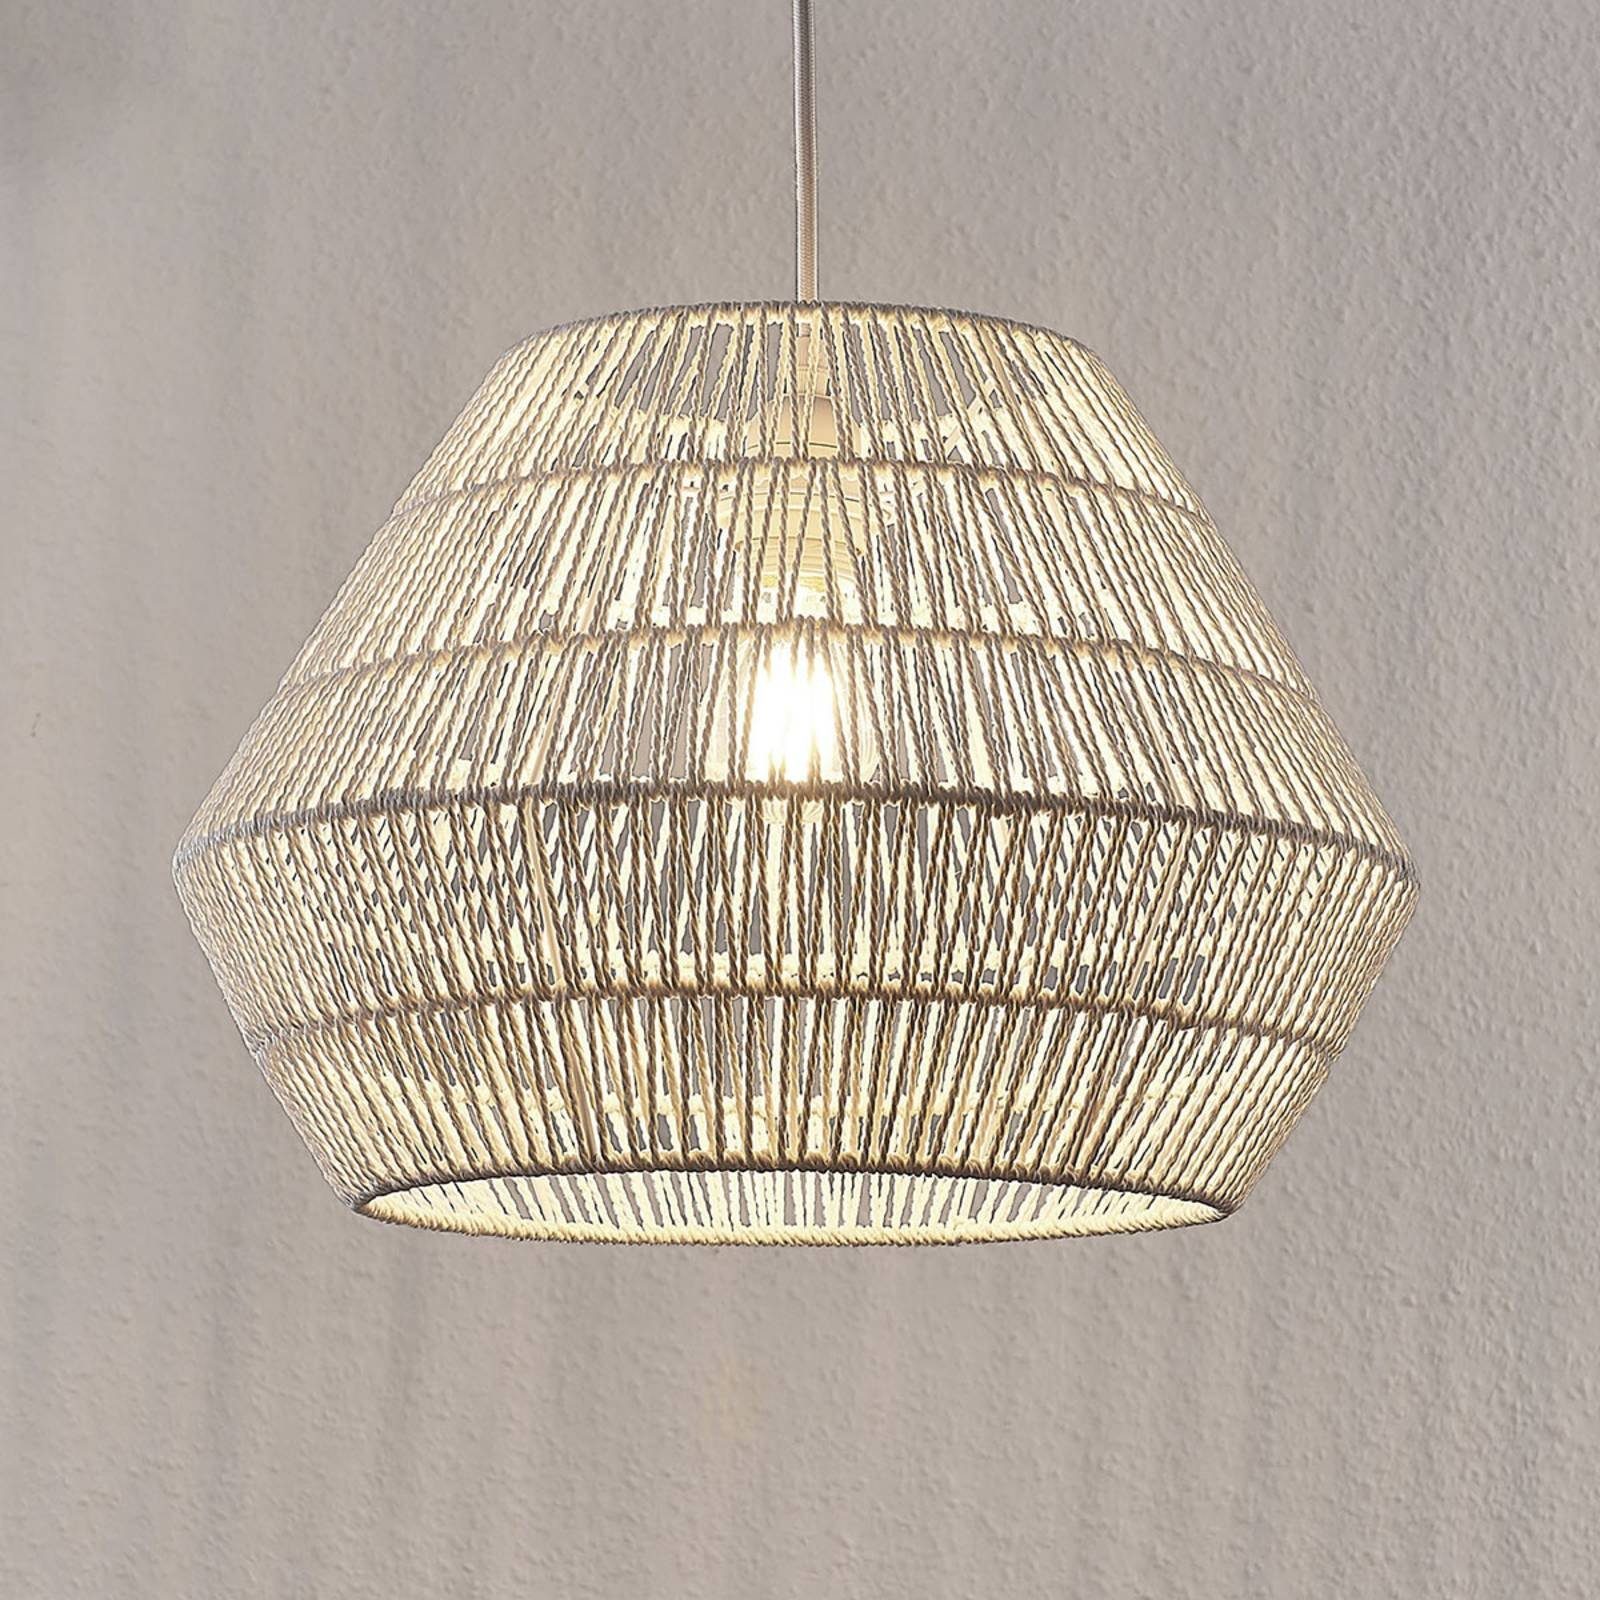 Lindby Hängeleuchte Ottavio, dimmbar, E27, nicht Metall, weiß, inklusive, 1 Leuchtmittel Modern, Papier, Deckenlampe flammig